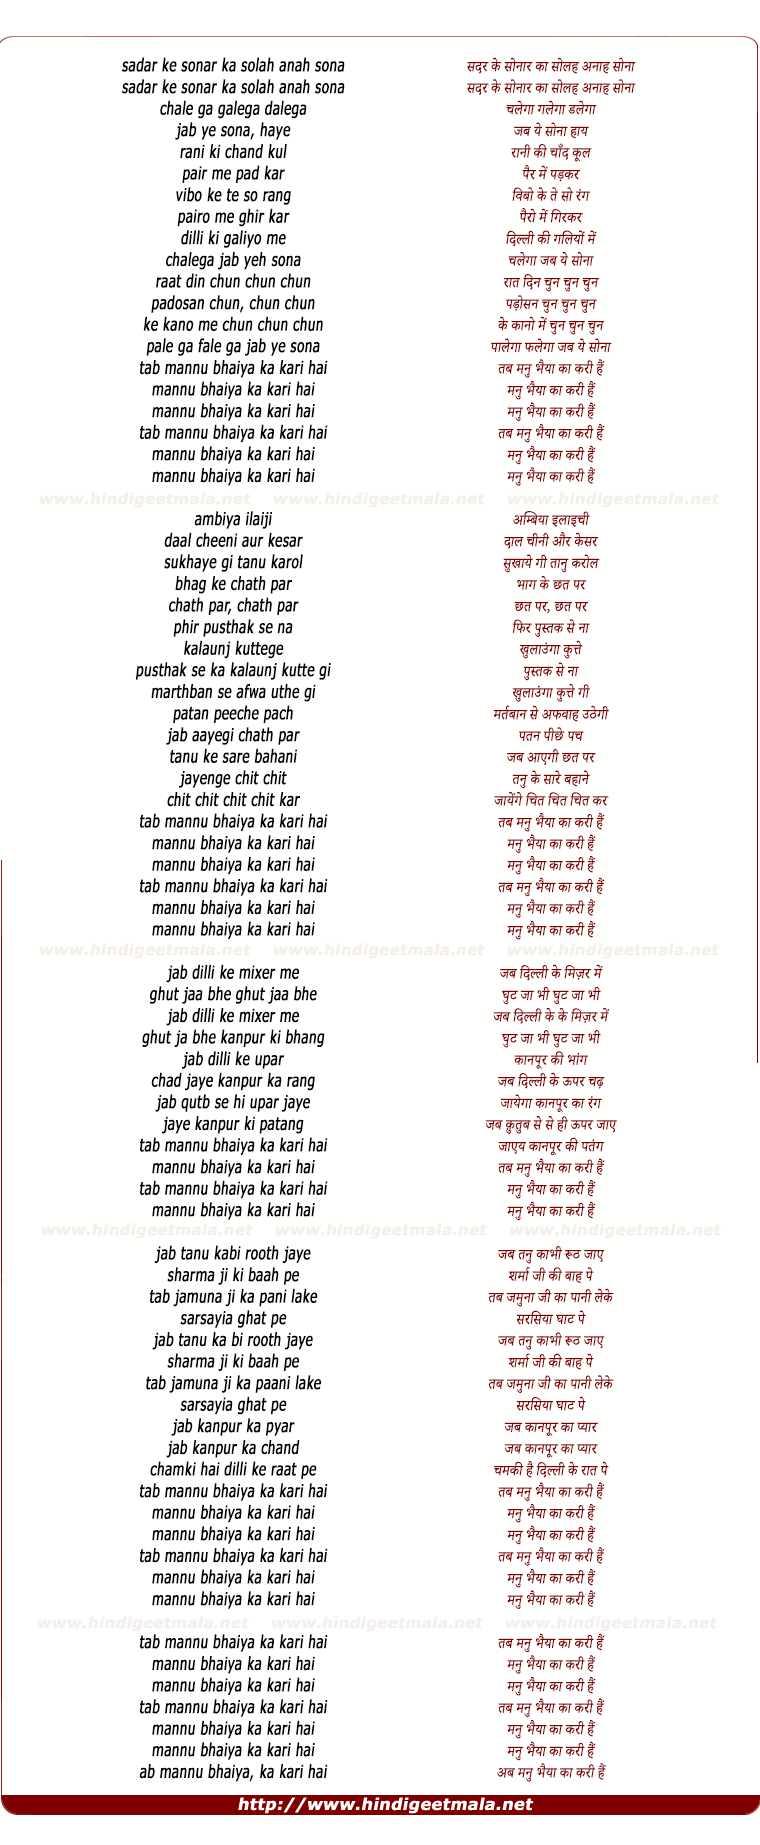 lyrics of song Mannu Bhaiyaa